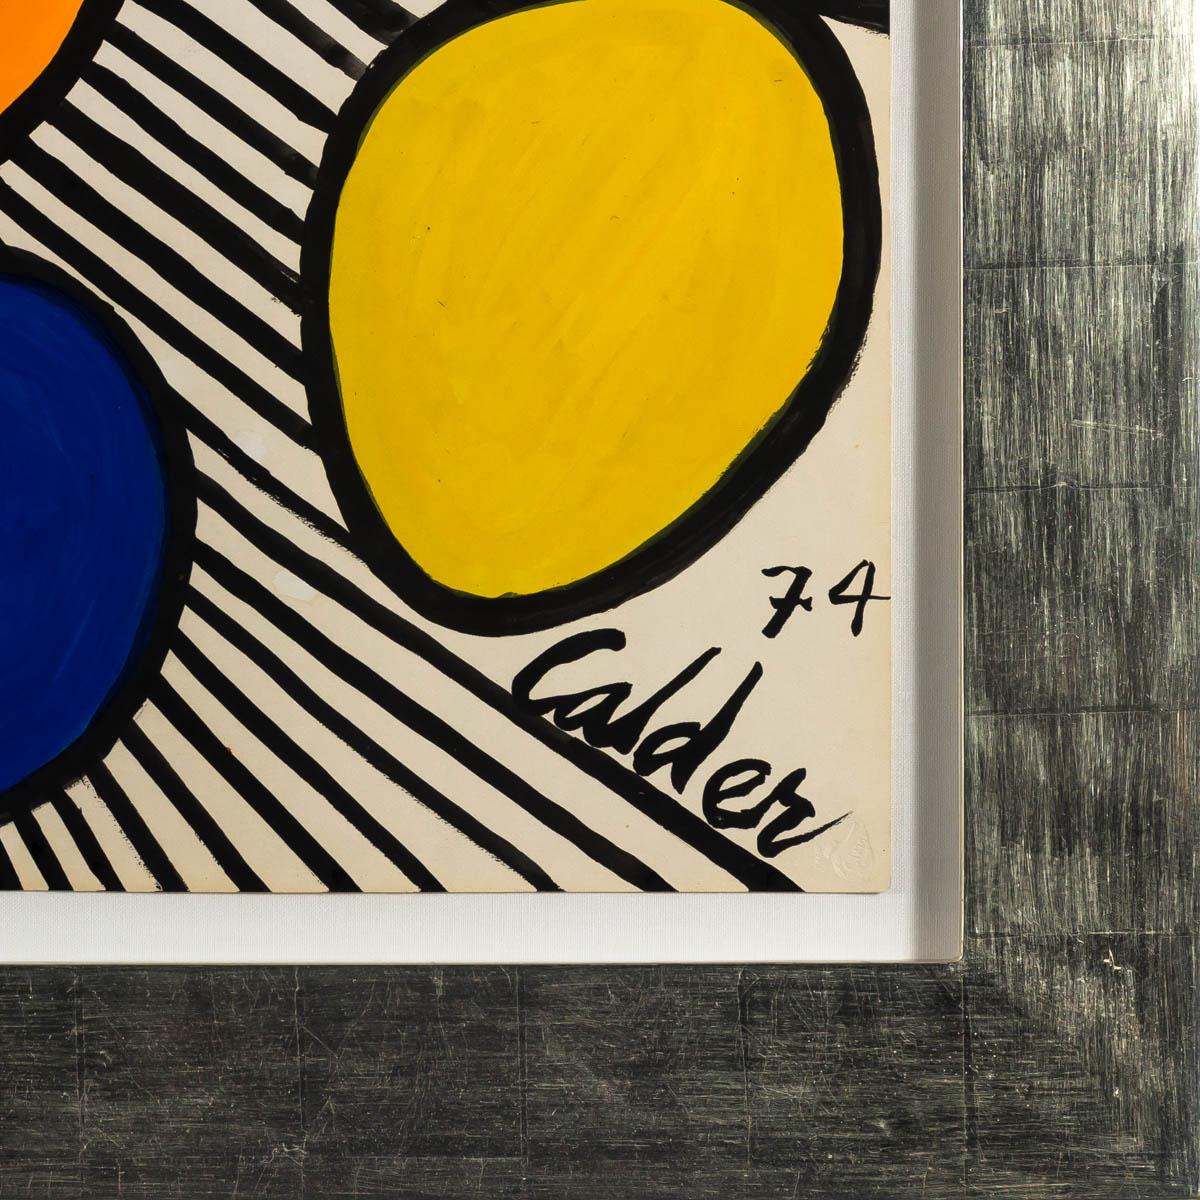 Bowling, 1974 - Modern Painting by Alexander Calder